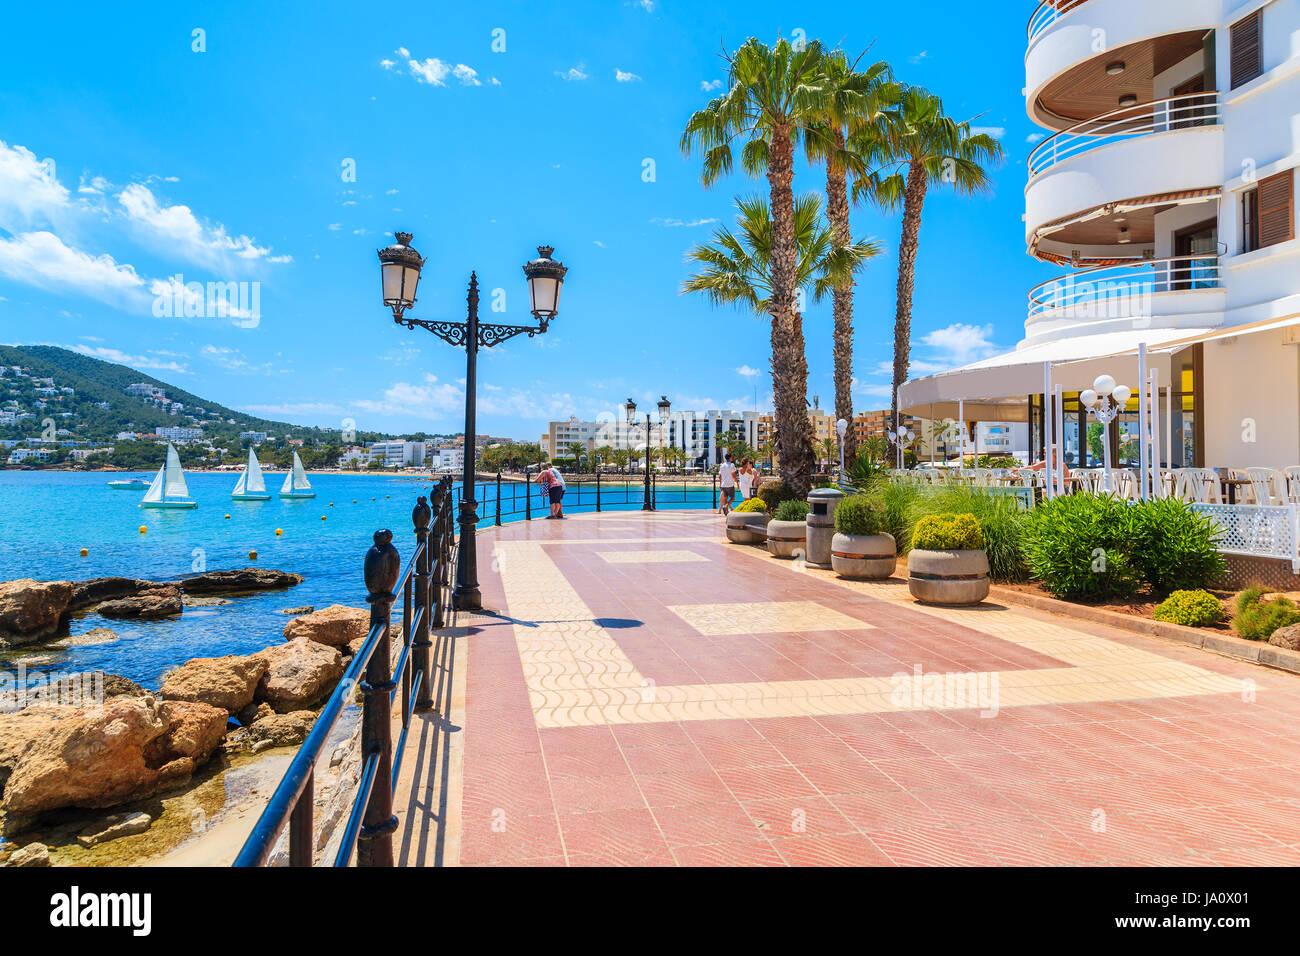 Strandpromenade am Meer in der Stadt Santa Eularia, Insel Ibiza, Spanien Stockfoto